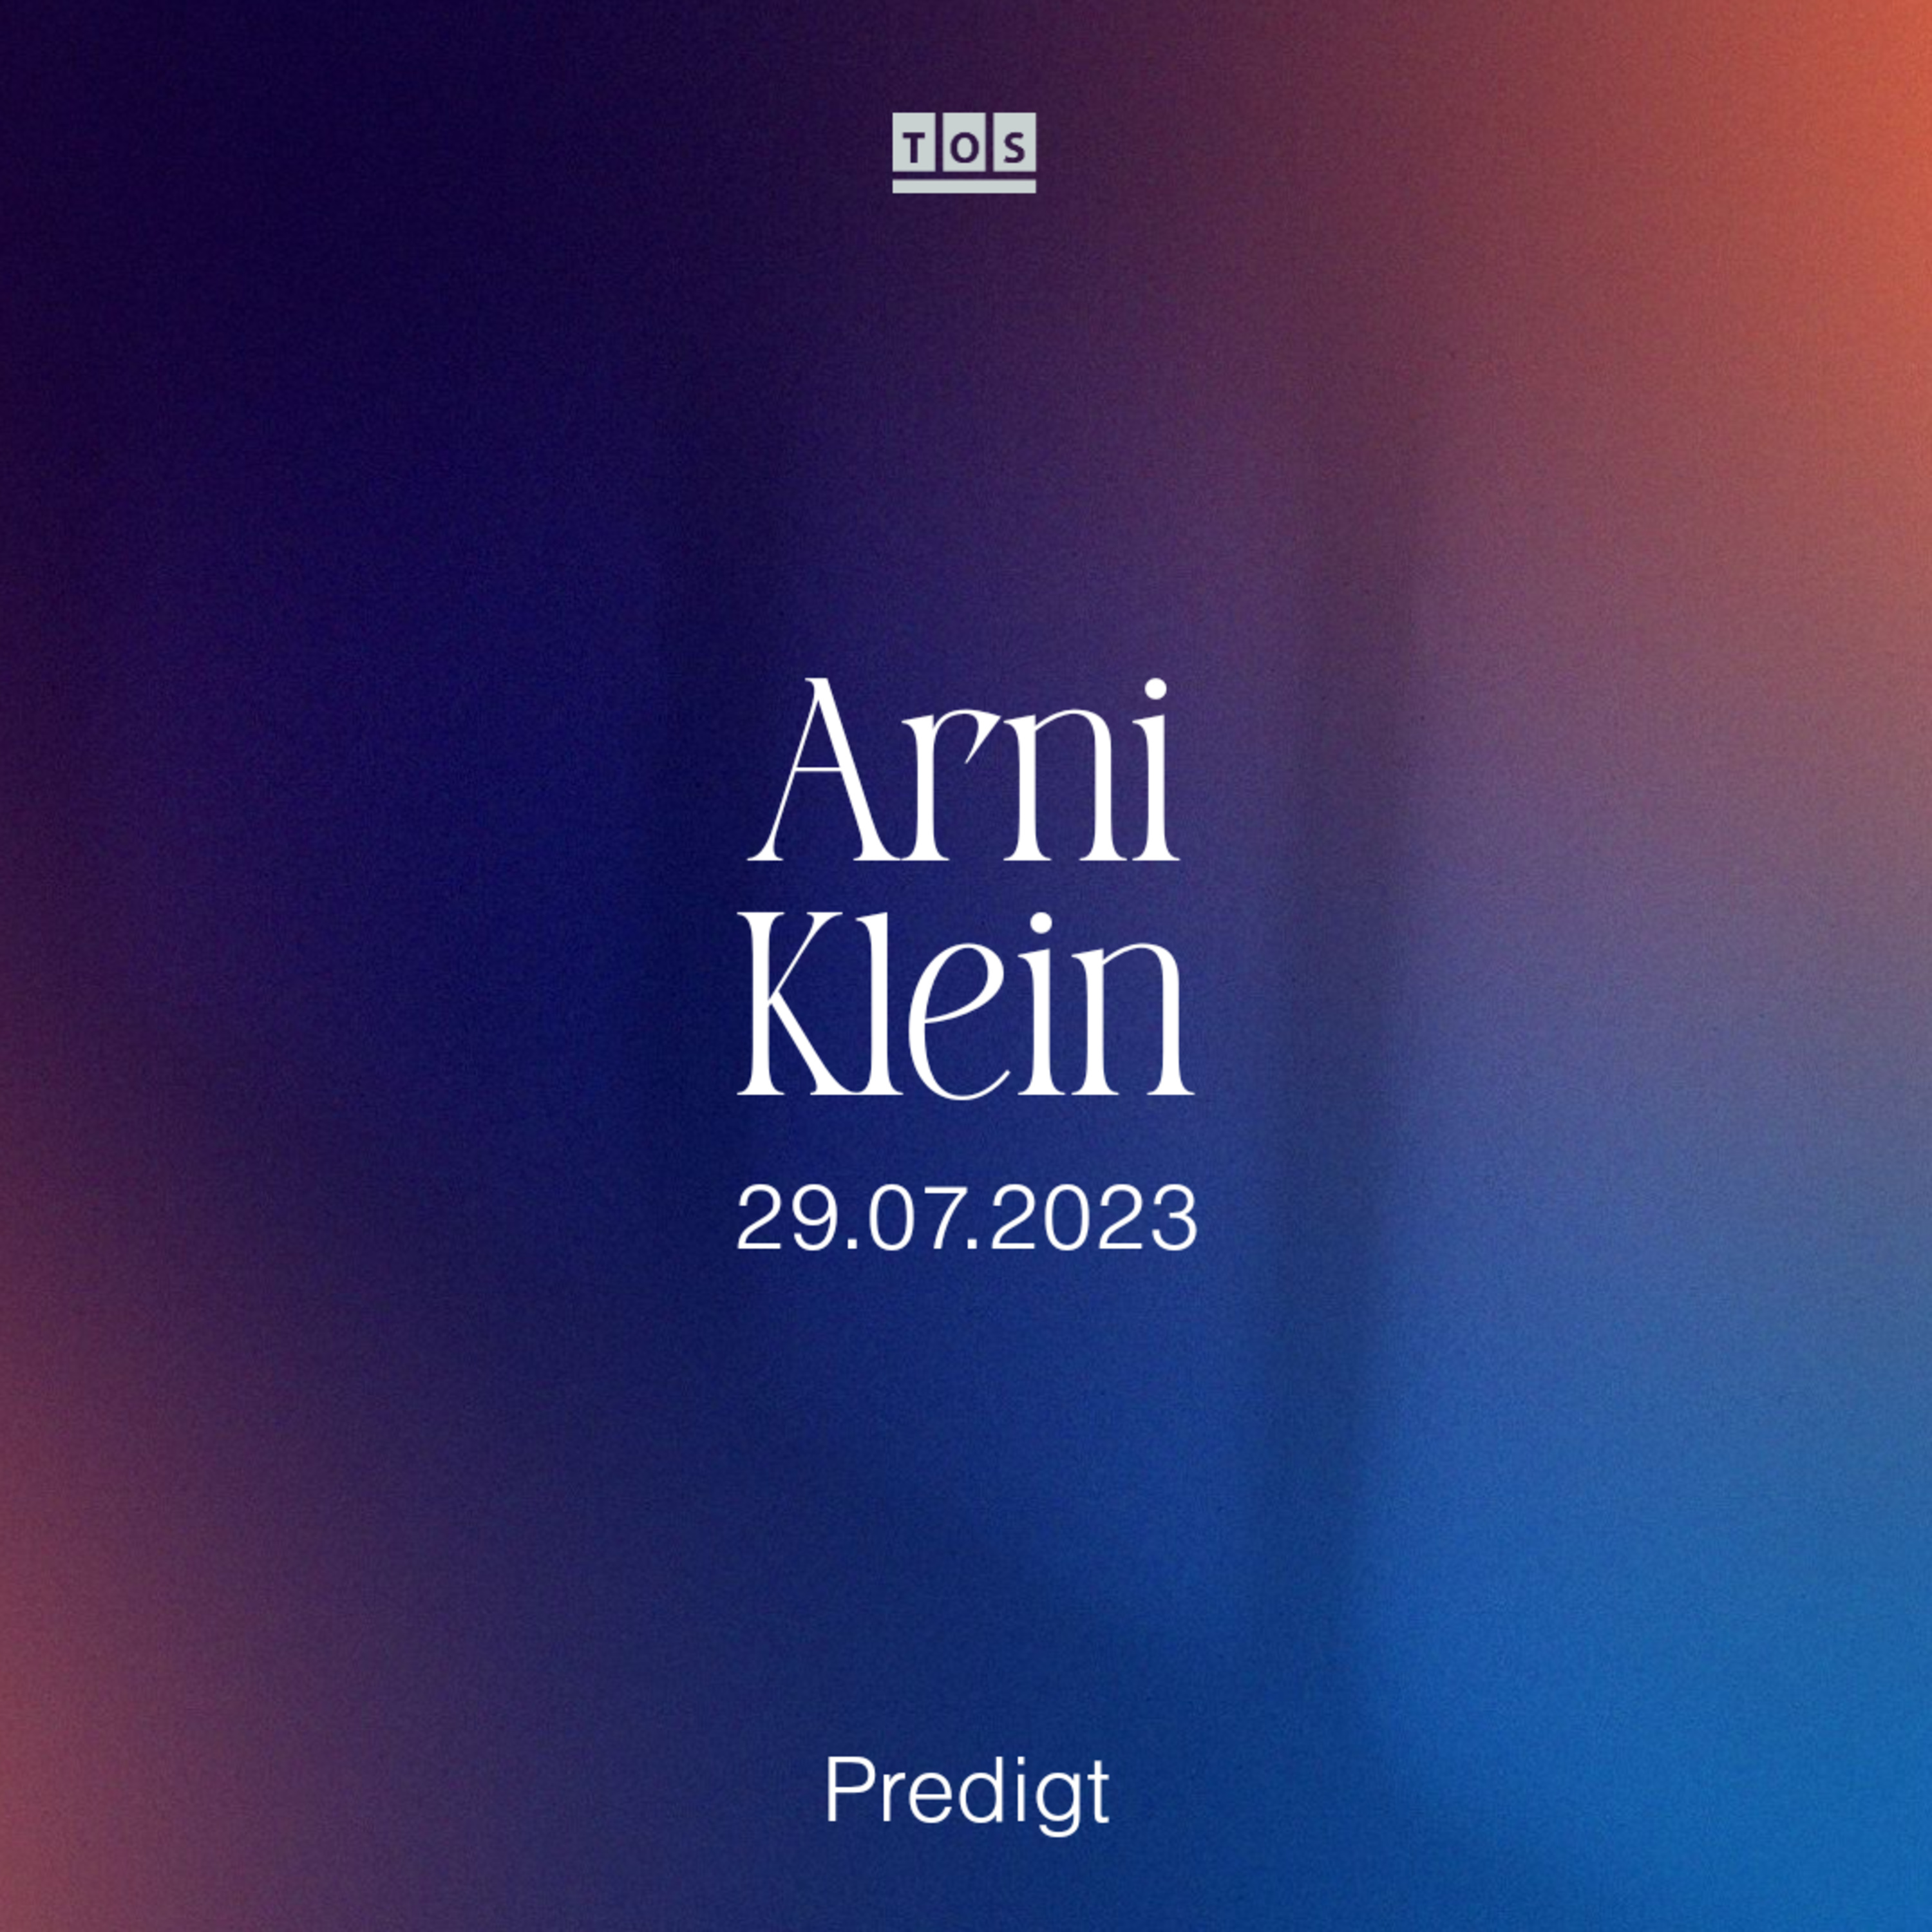 Arni Klein - 29.07.2023 hero artwork